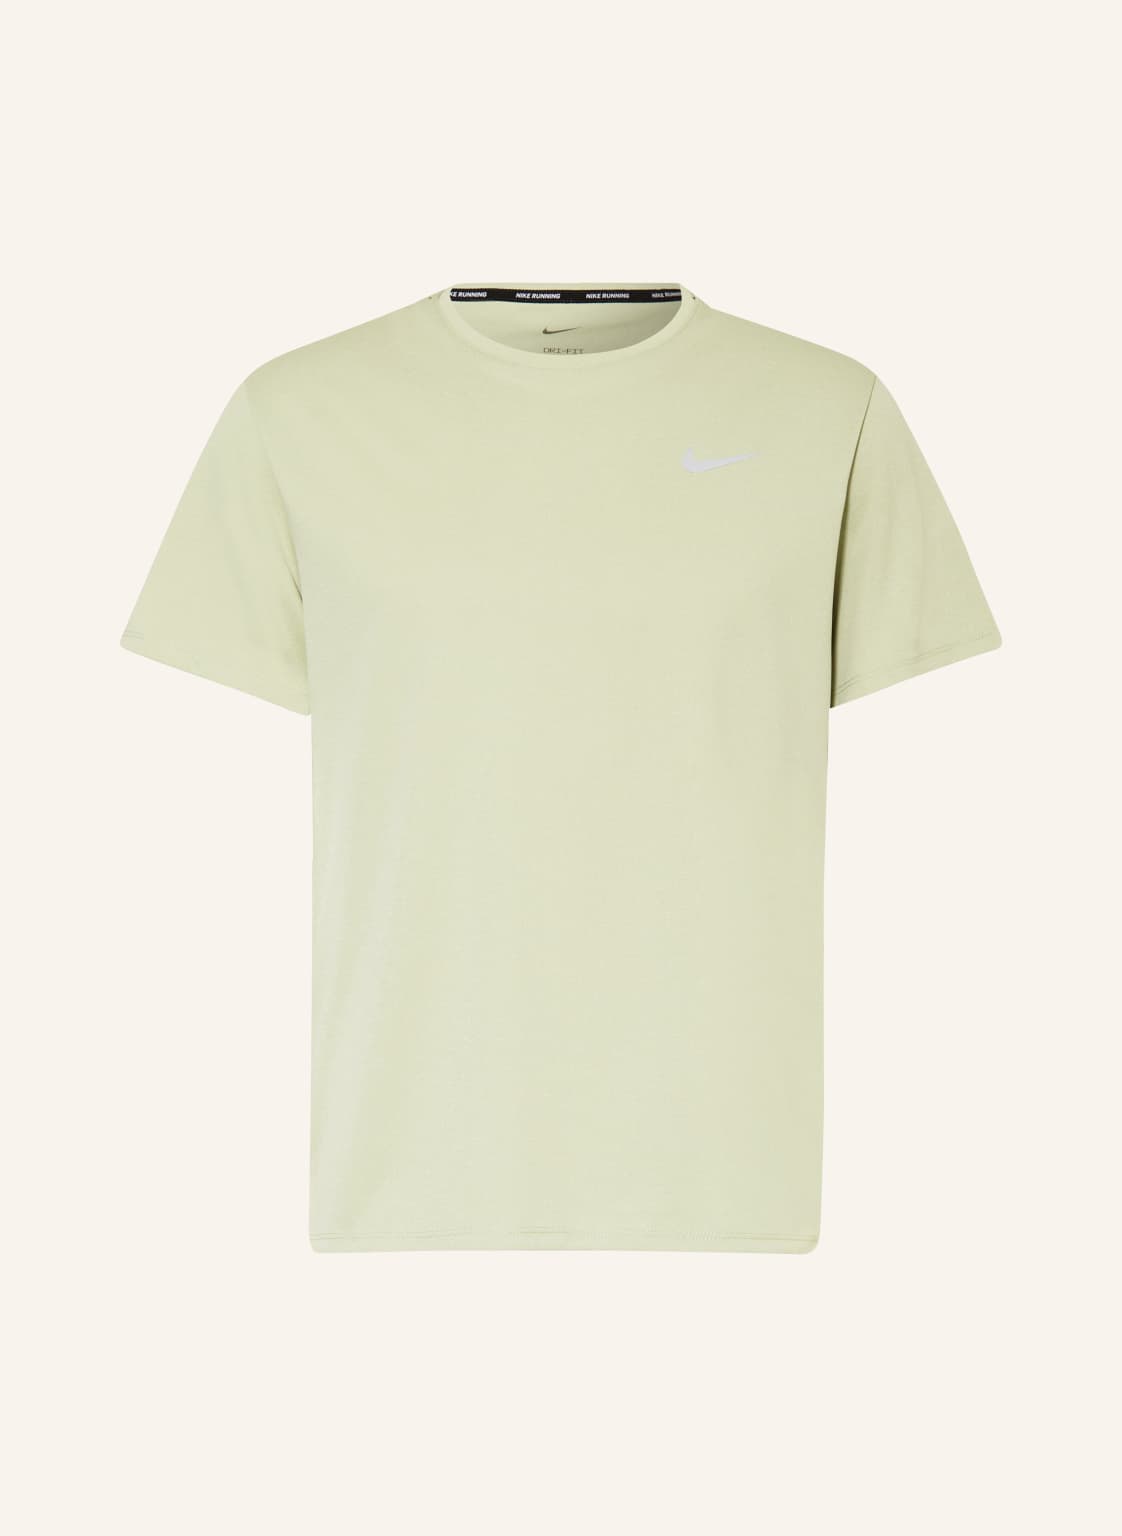 Nike T-Shirt Miler gruen von Nike